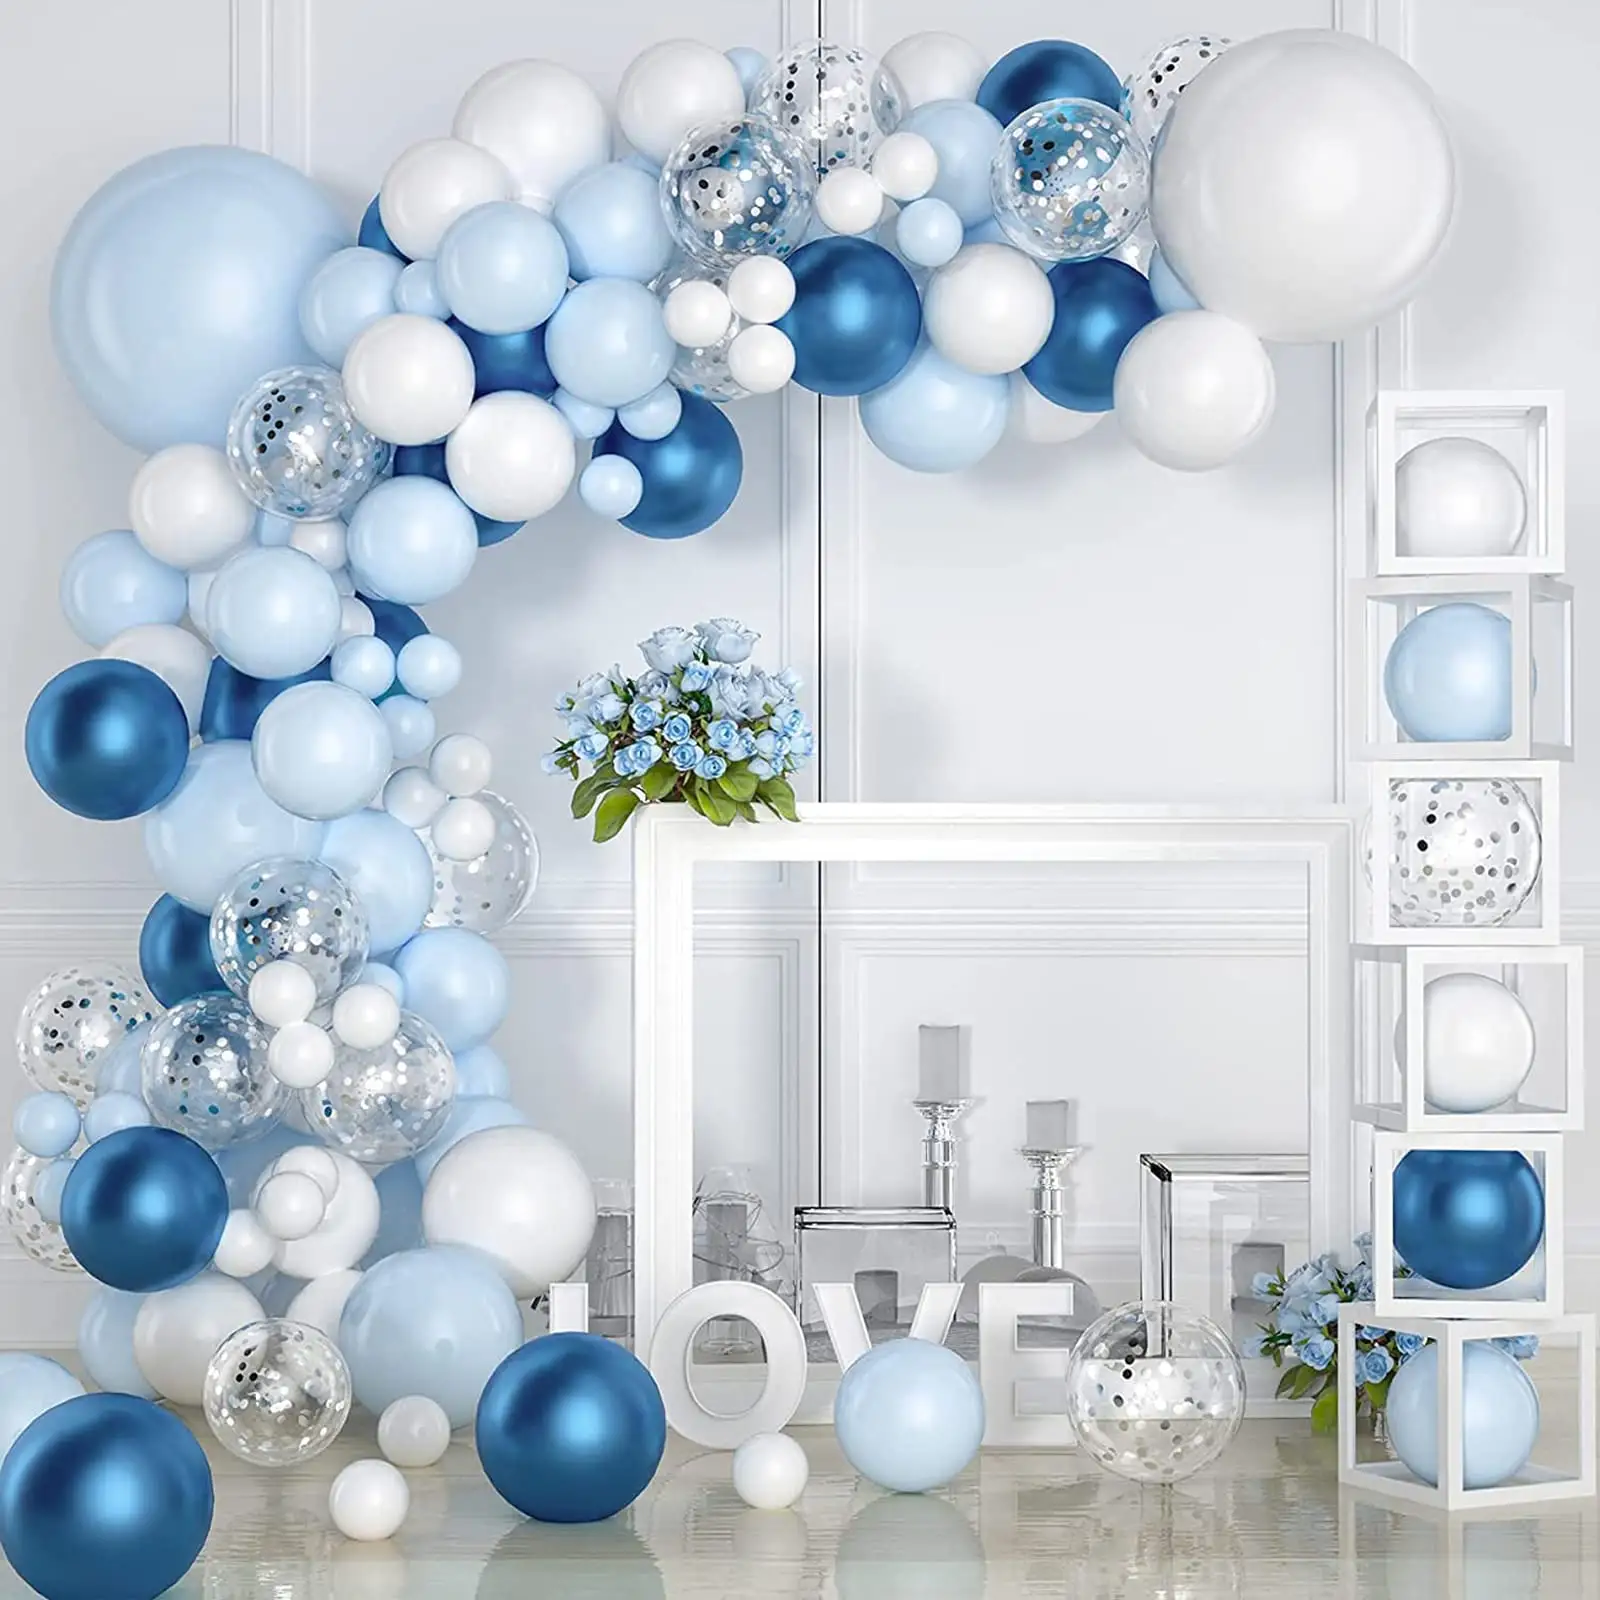 Kit lengkungan karangan bunga balon biru, balon Confetti biru metalik untuk Baby Shower pengantin ulang tahun pernikahan